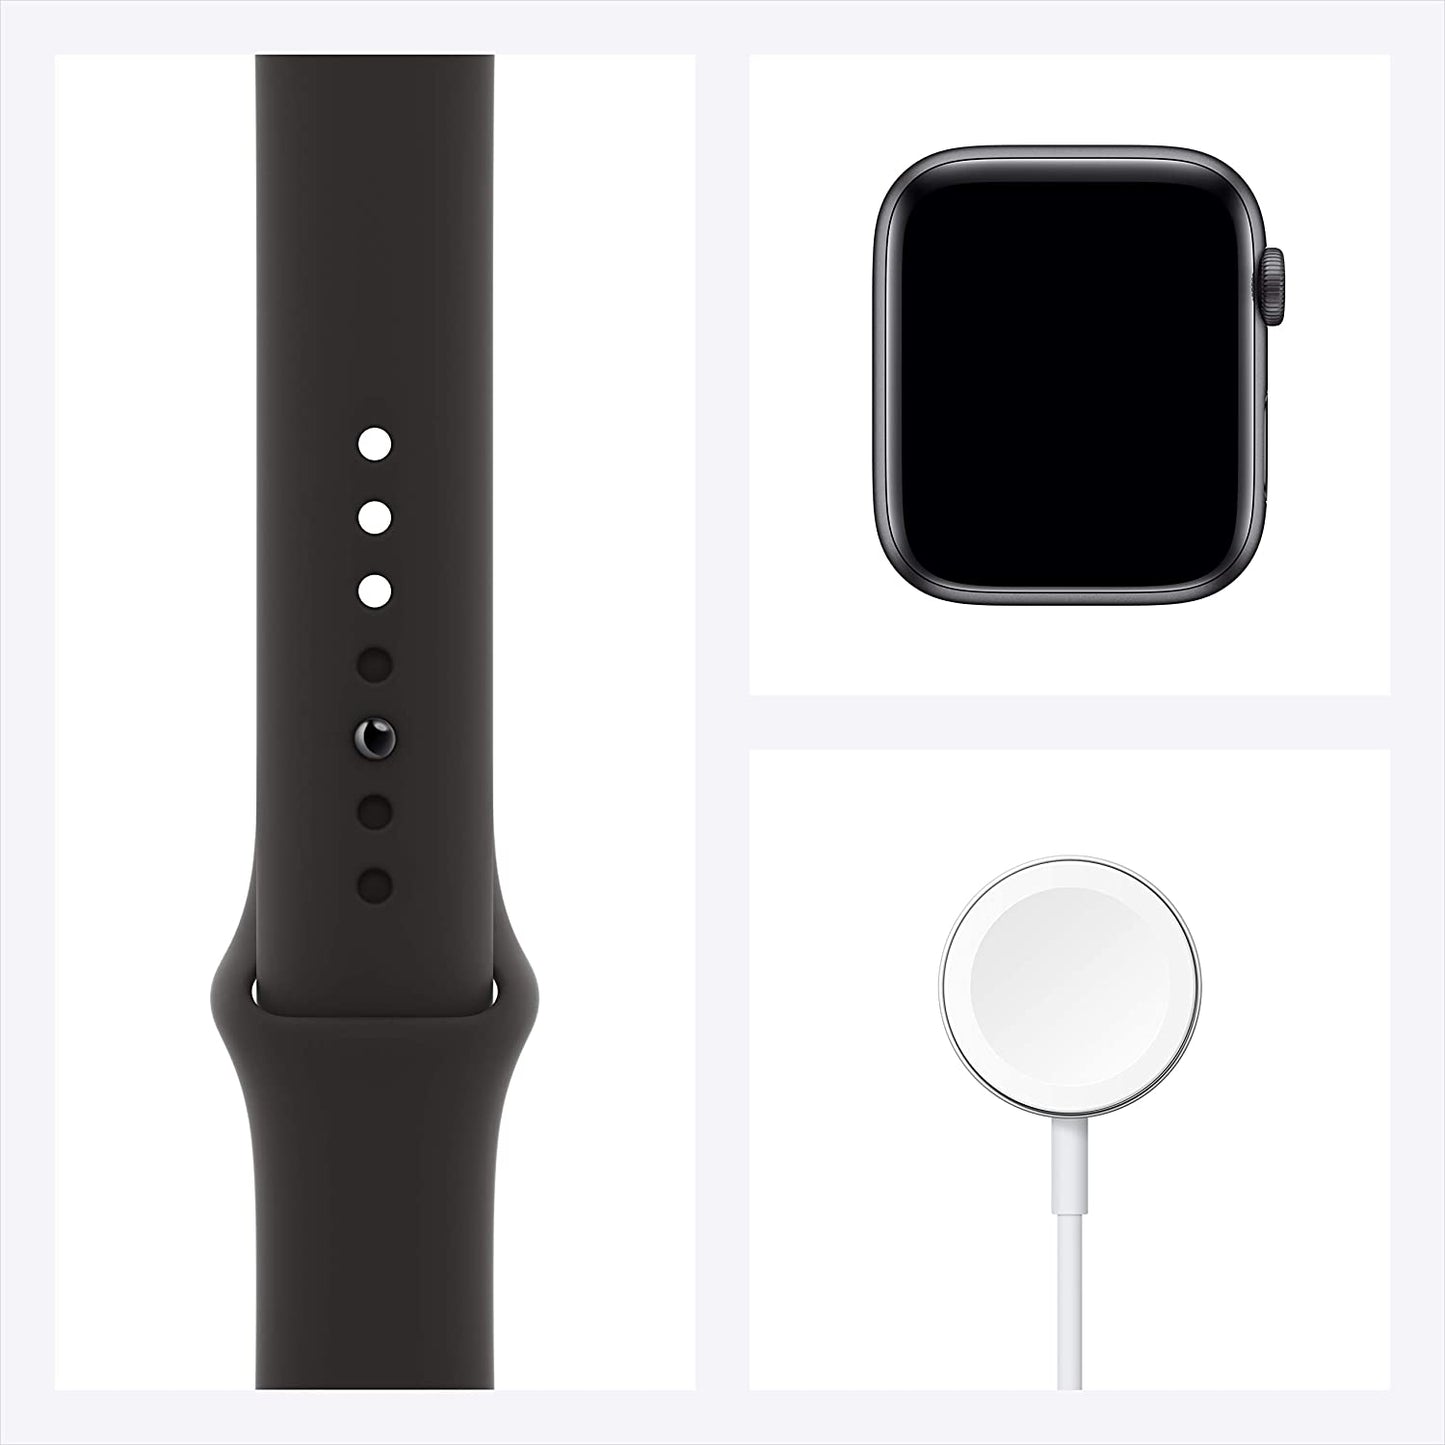 (Open Box) Apple Watch Series 6 GPS, 44mm Space Gray Aluminum Case w Black Sport Band